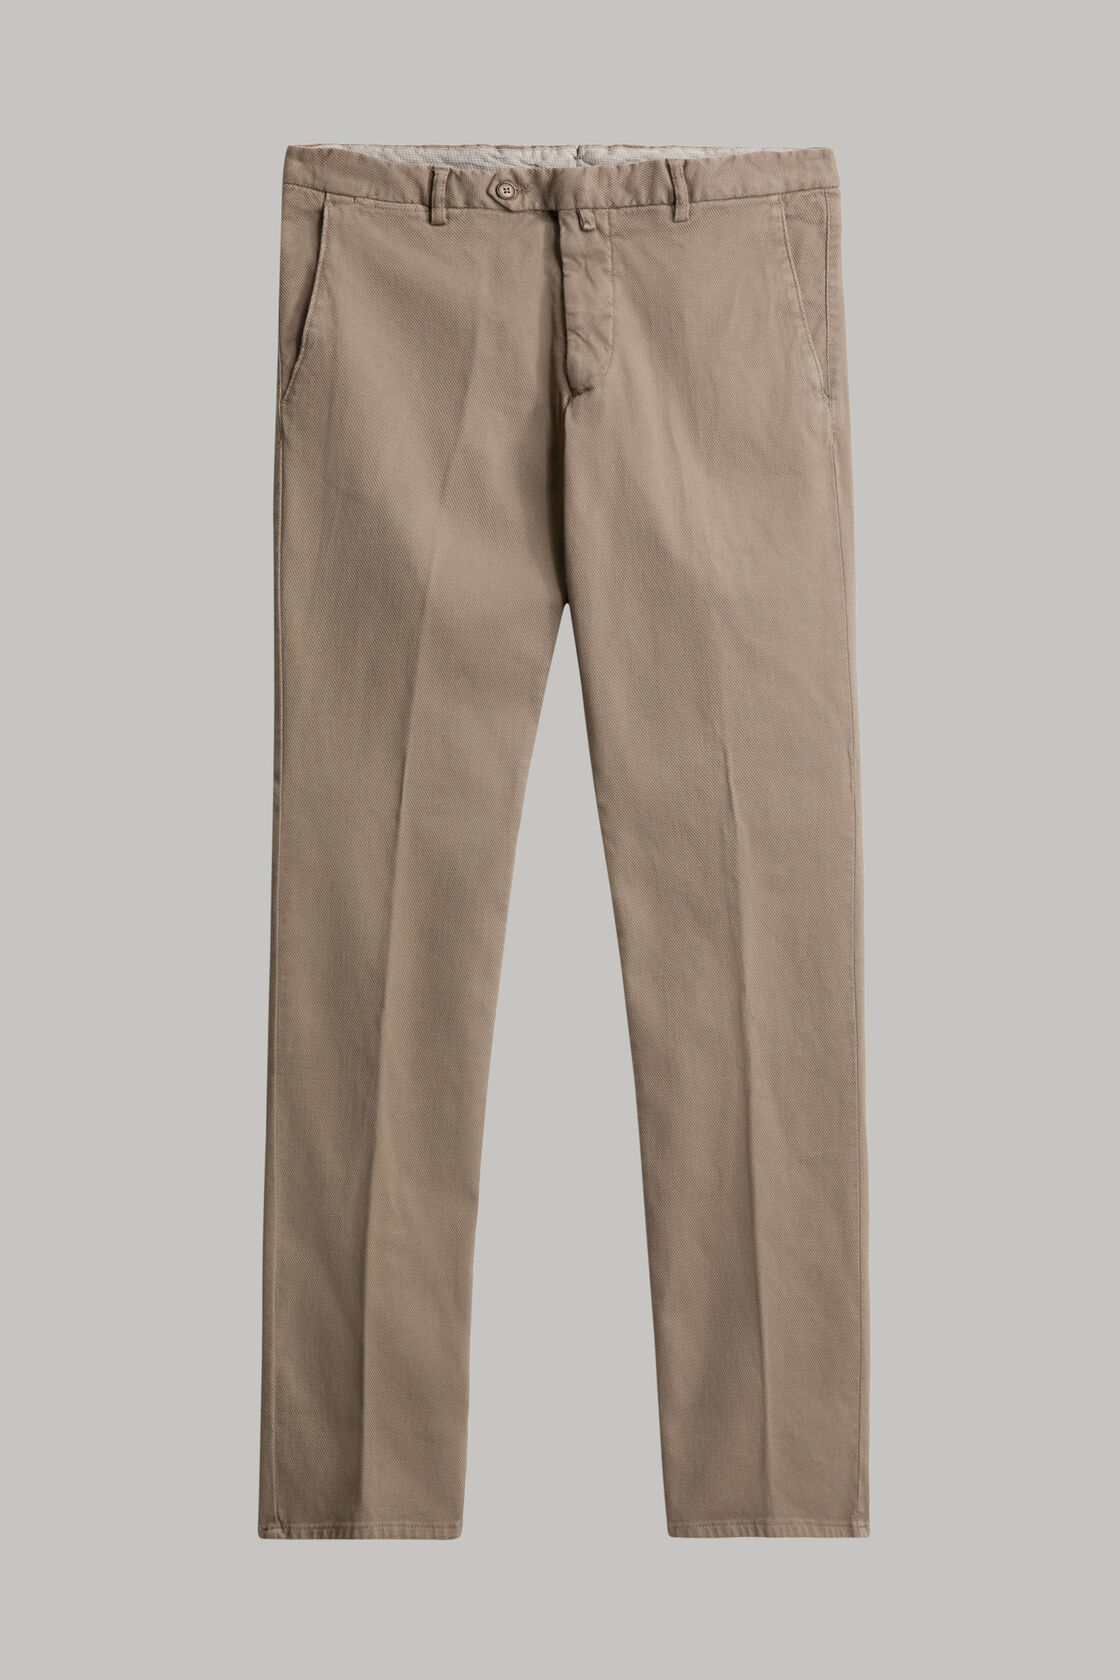 Pantalon en coton tencel extensible coupe slim, , hi-res